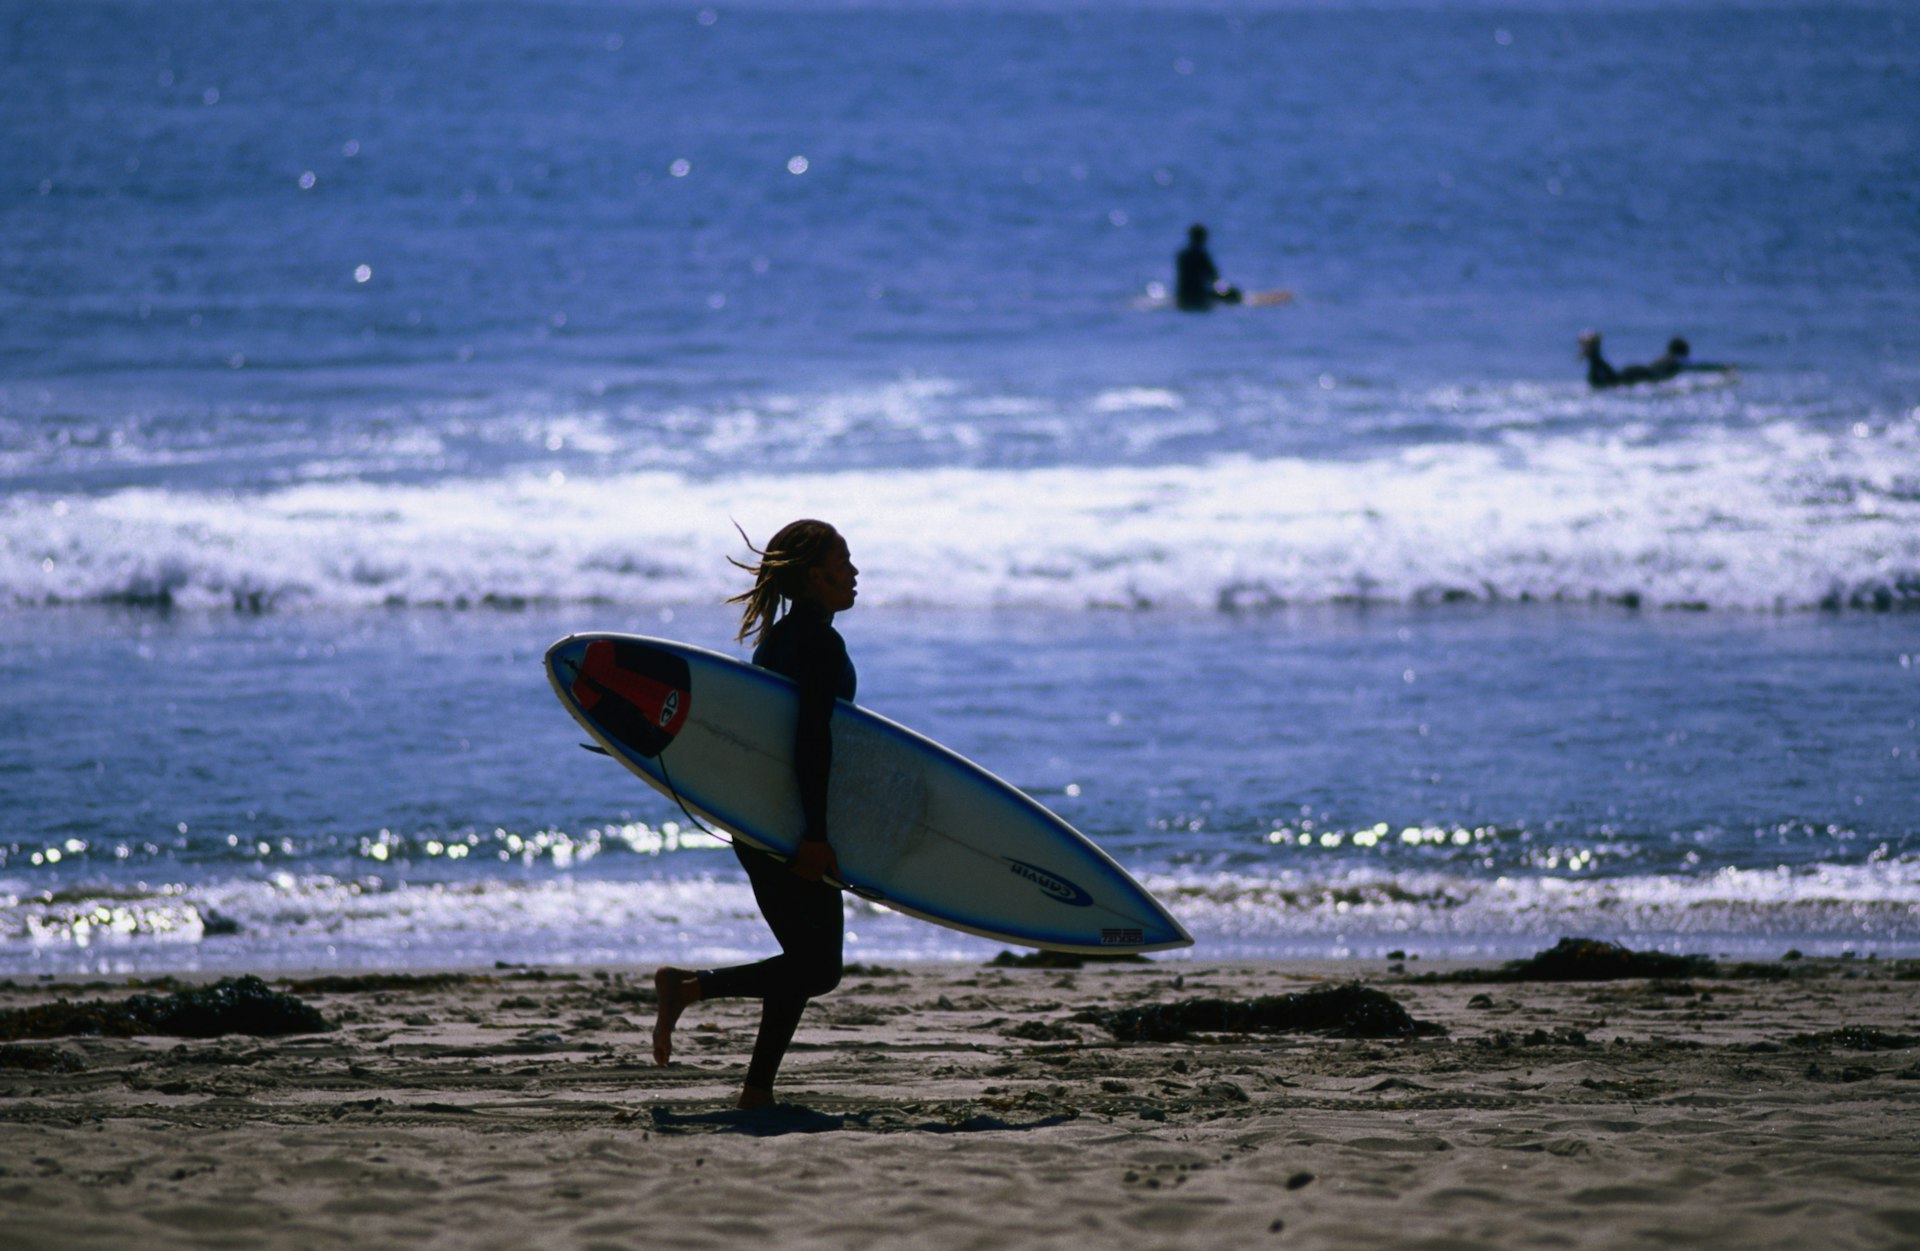 A surfer runs to catch some Malibu wavesLPI-13779-150.jpg